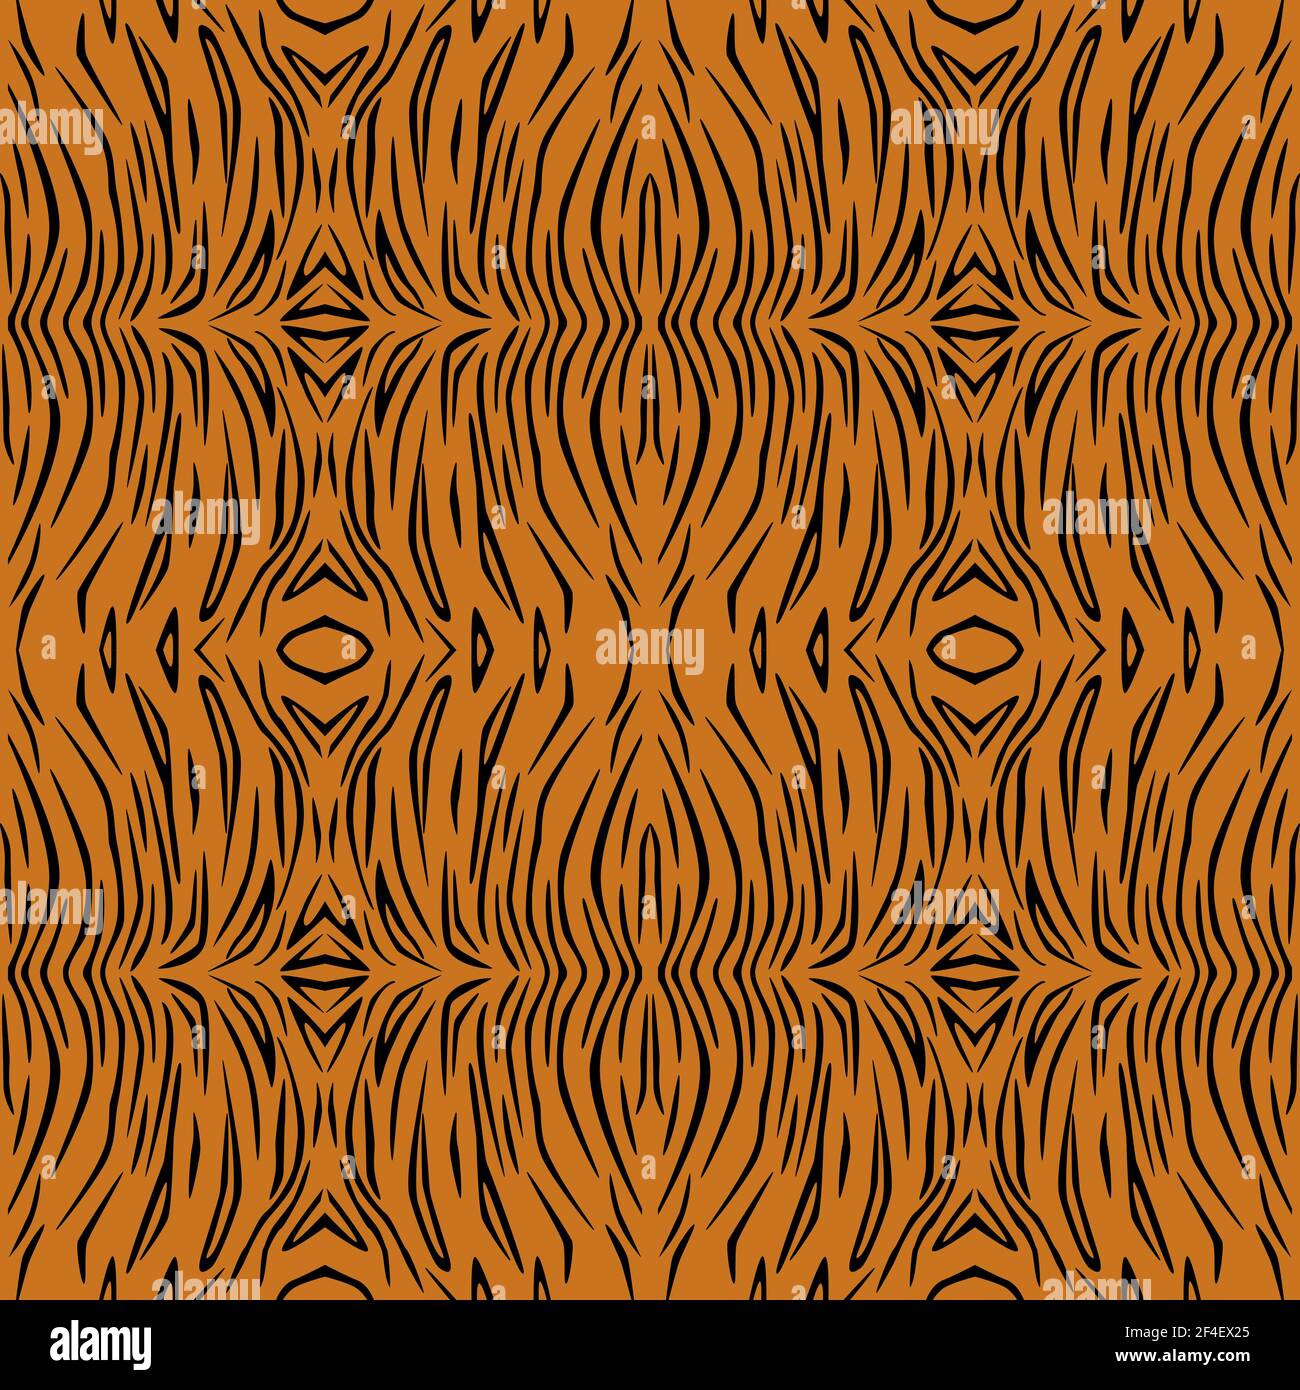 Tiger Skin Vector Art & Graphics